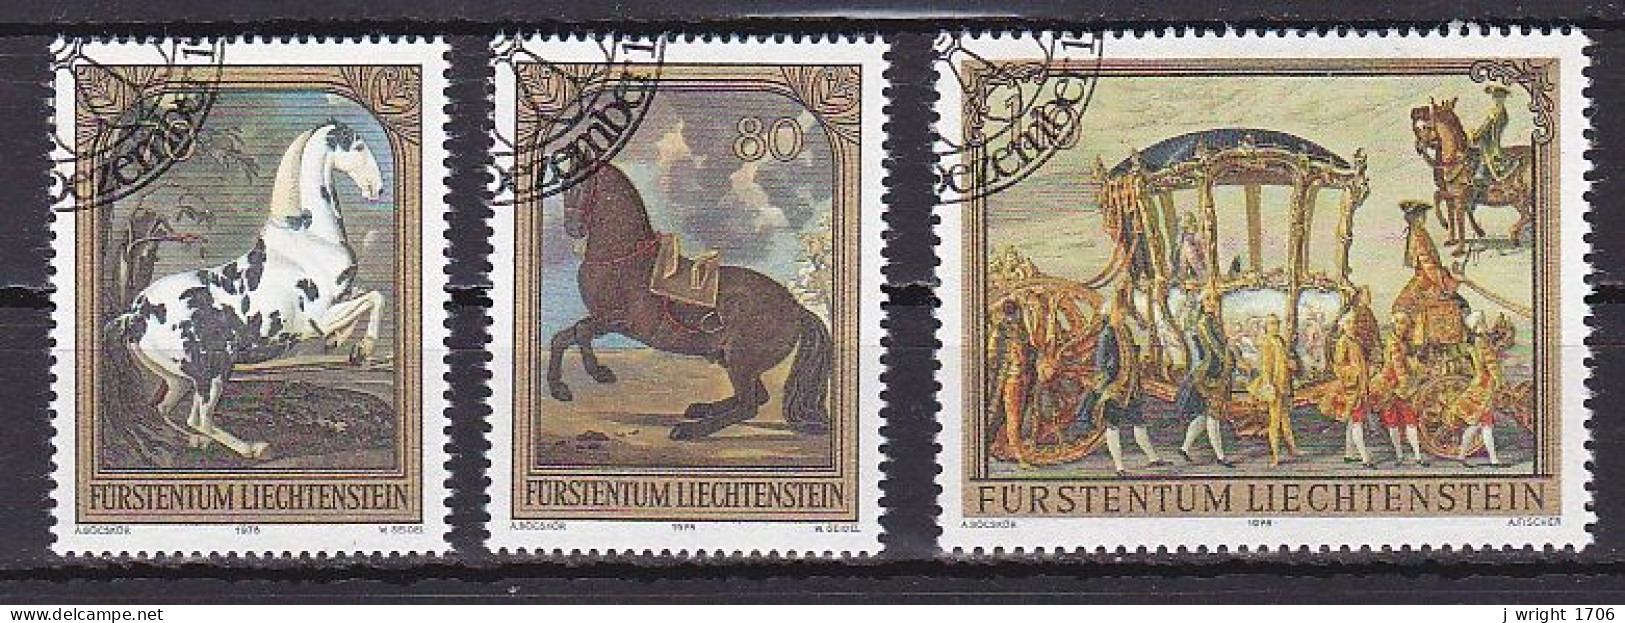 Liechtenstein, 1978, Paintings, Set, CTO - Used Stamps